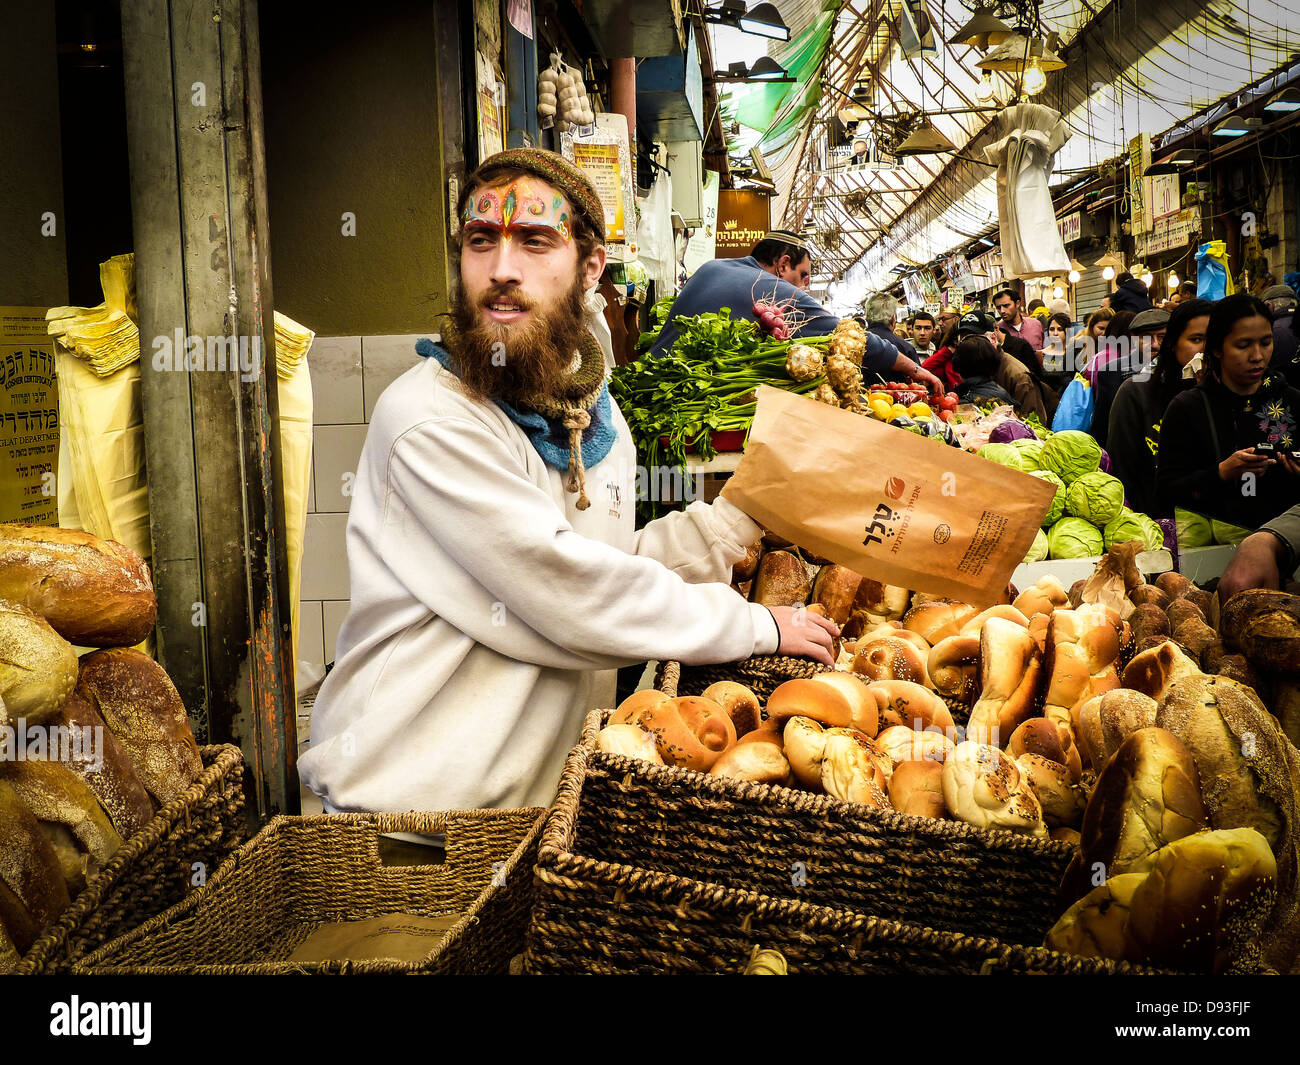 Israel, Jerusalem, Machane Yehuda market selling bread, rolls, and Challah Stock Photo